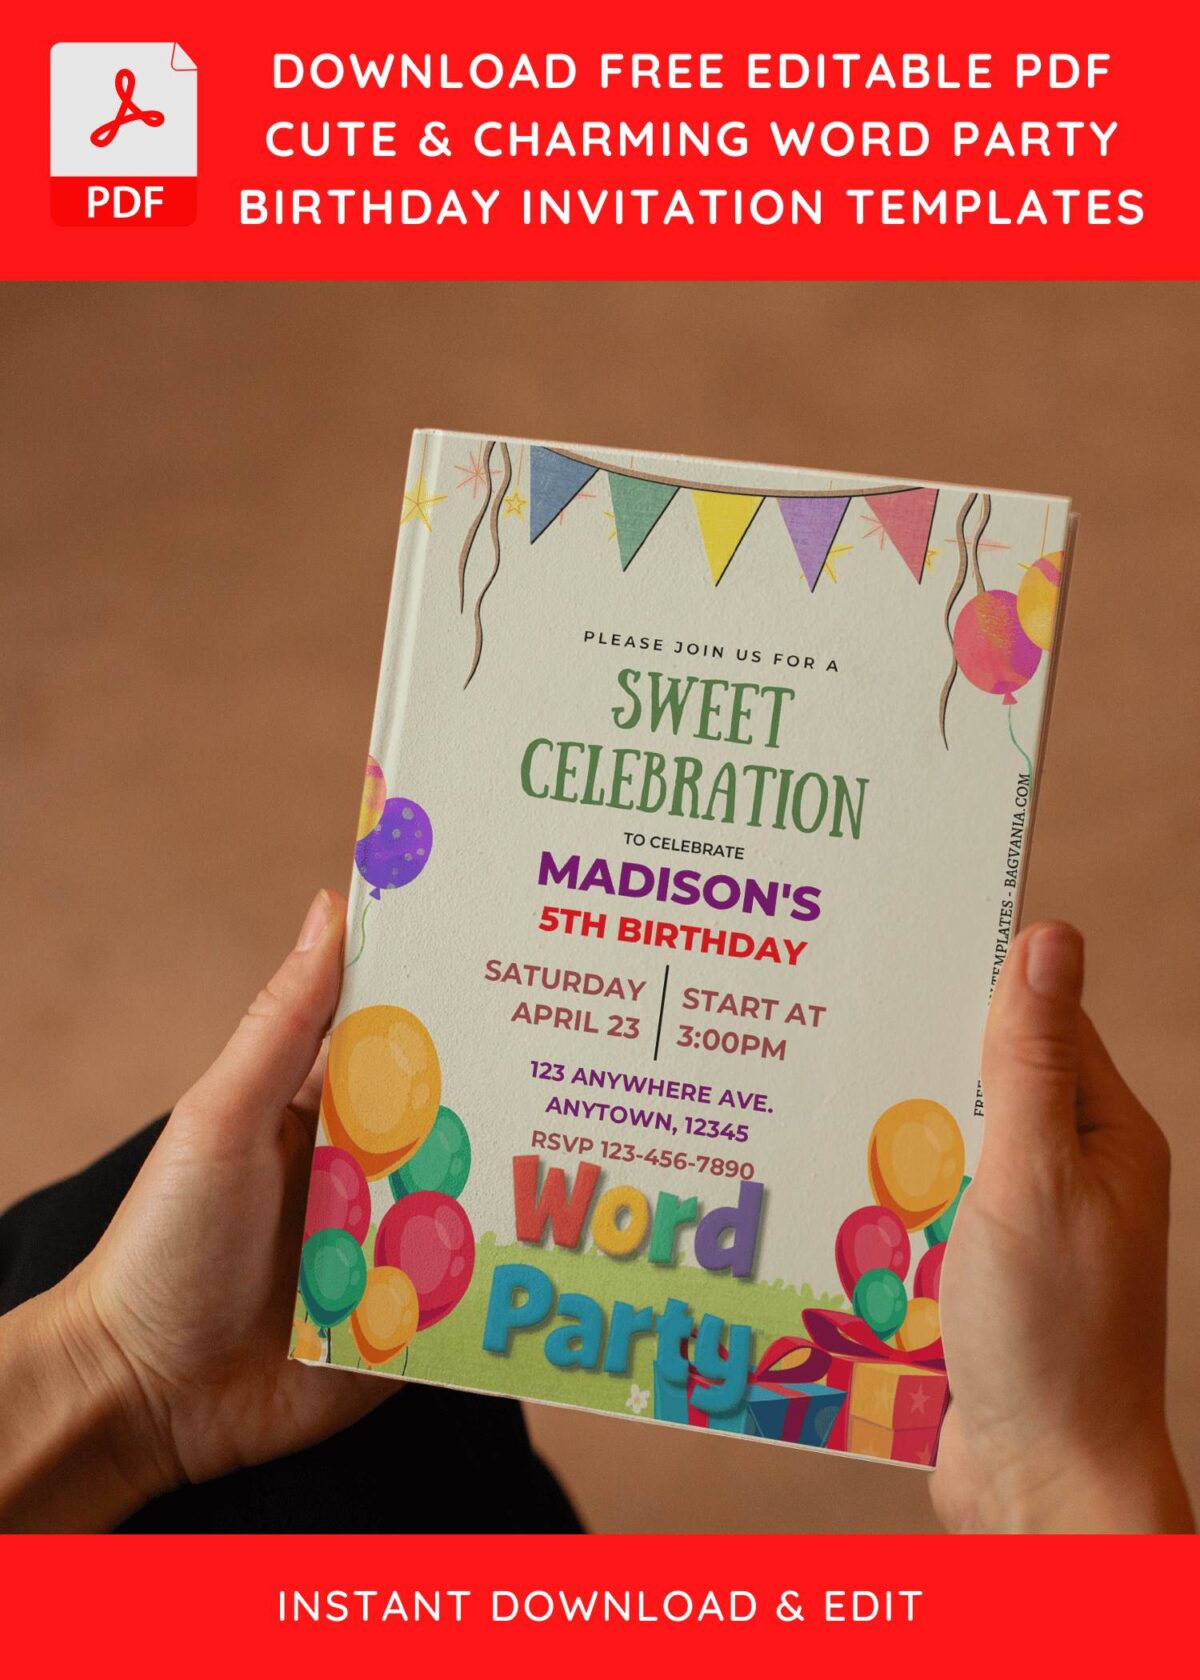 (Free Editable PDF) Charming Word Party Themed Birthday Invitation Templates E